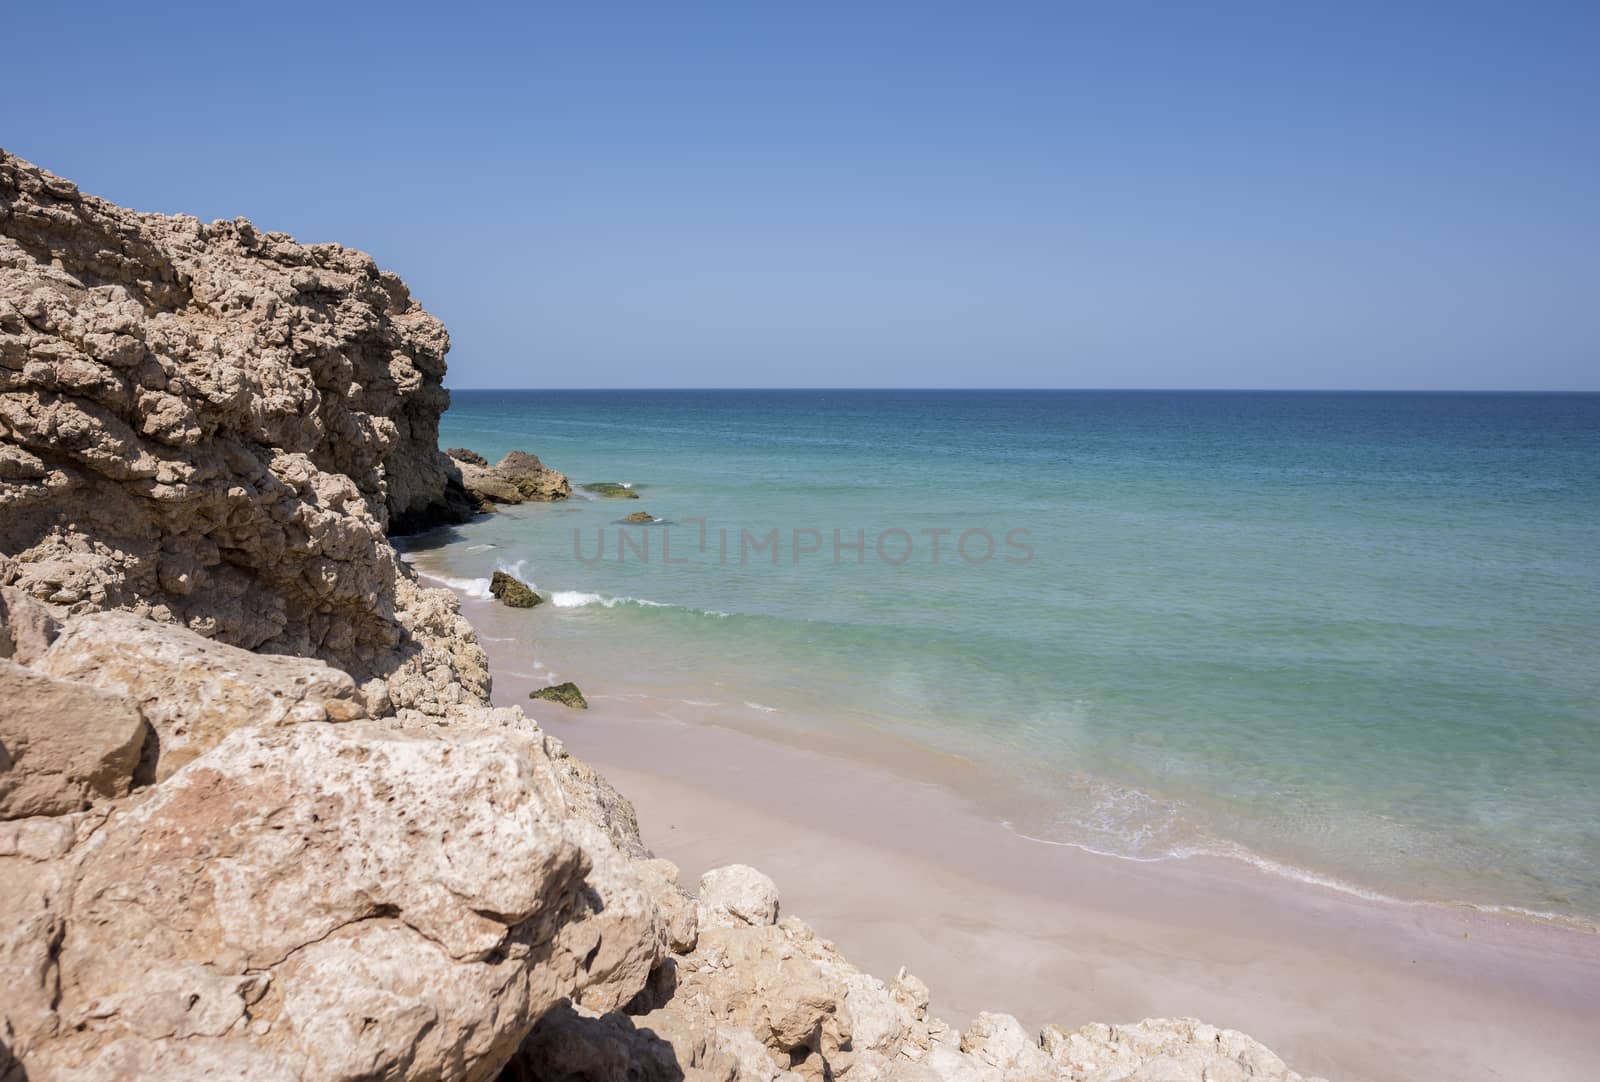 Beach at wild coast of Ras Al Jinz, Oman by GABIS